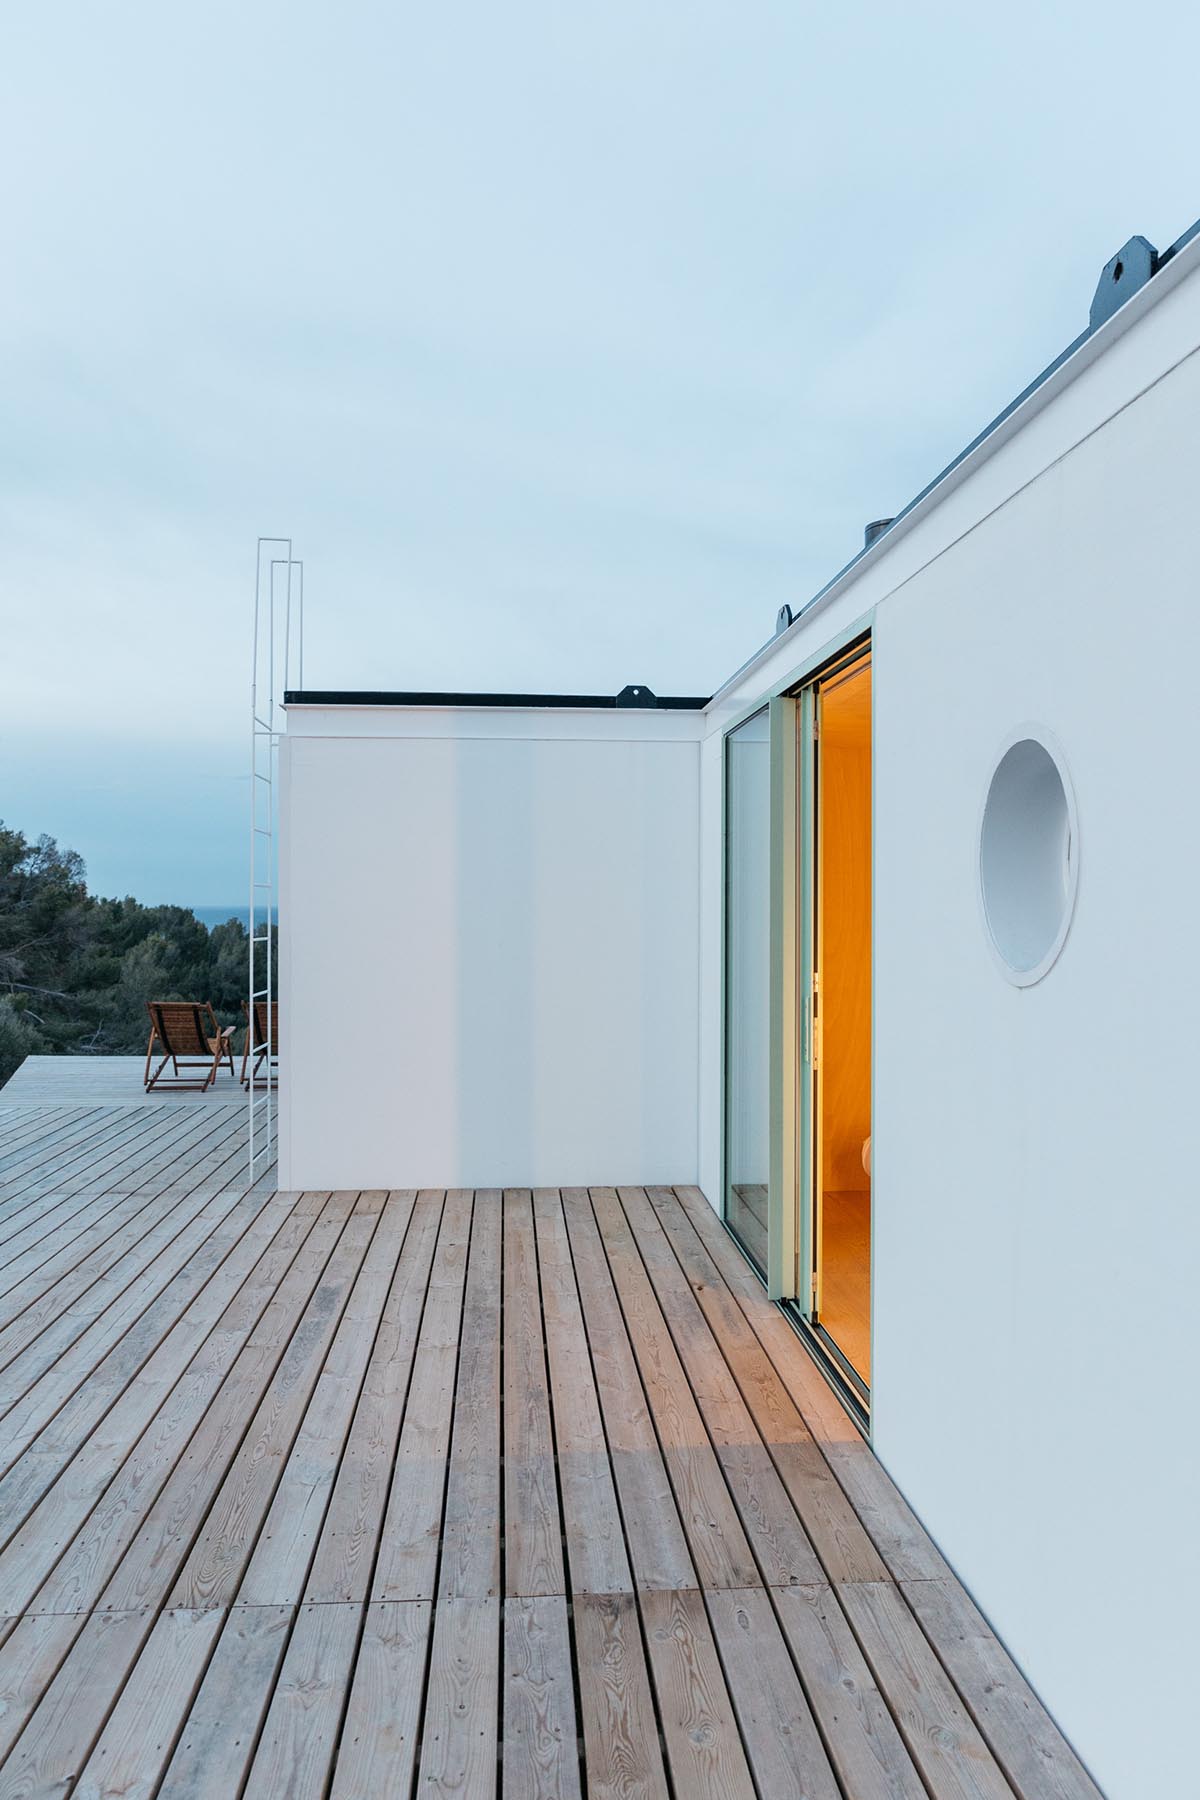 Ignacio de la Vega and Pilar Cano-Lasso create T-shaped cabin framing views from the Mediterranean